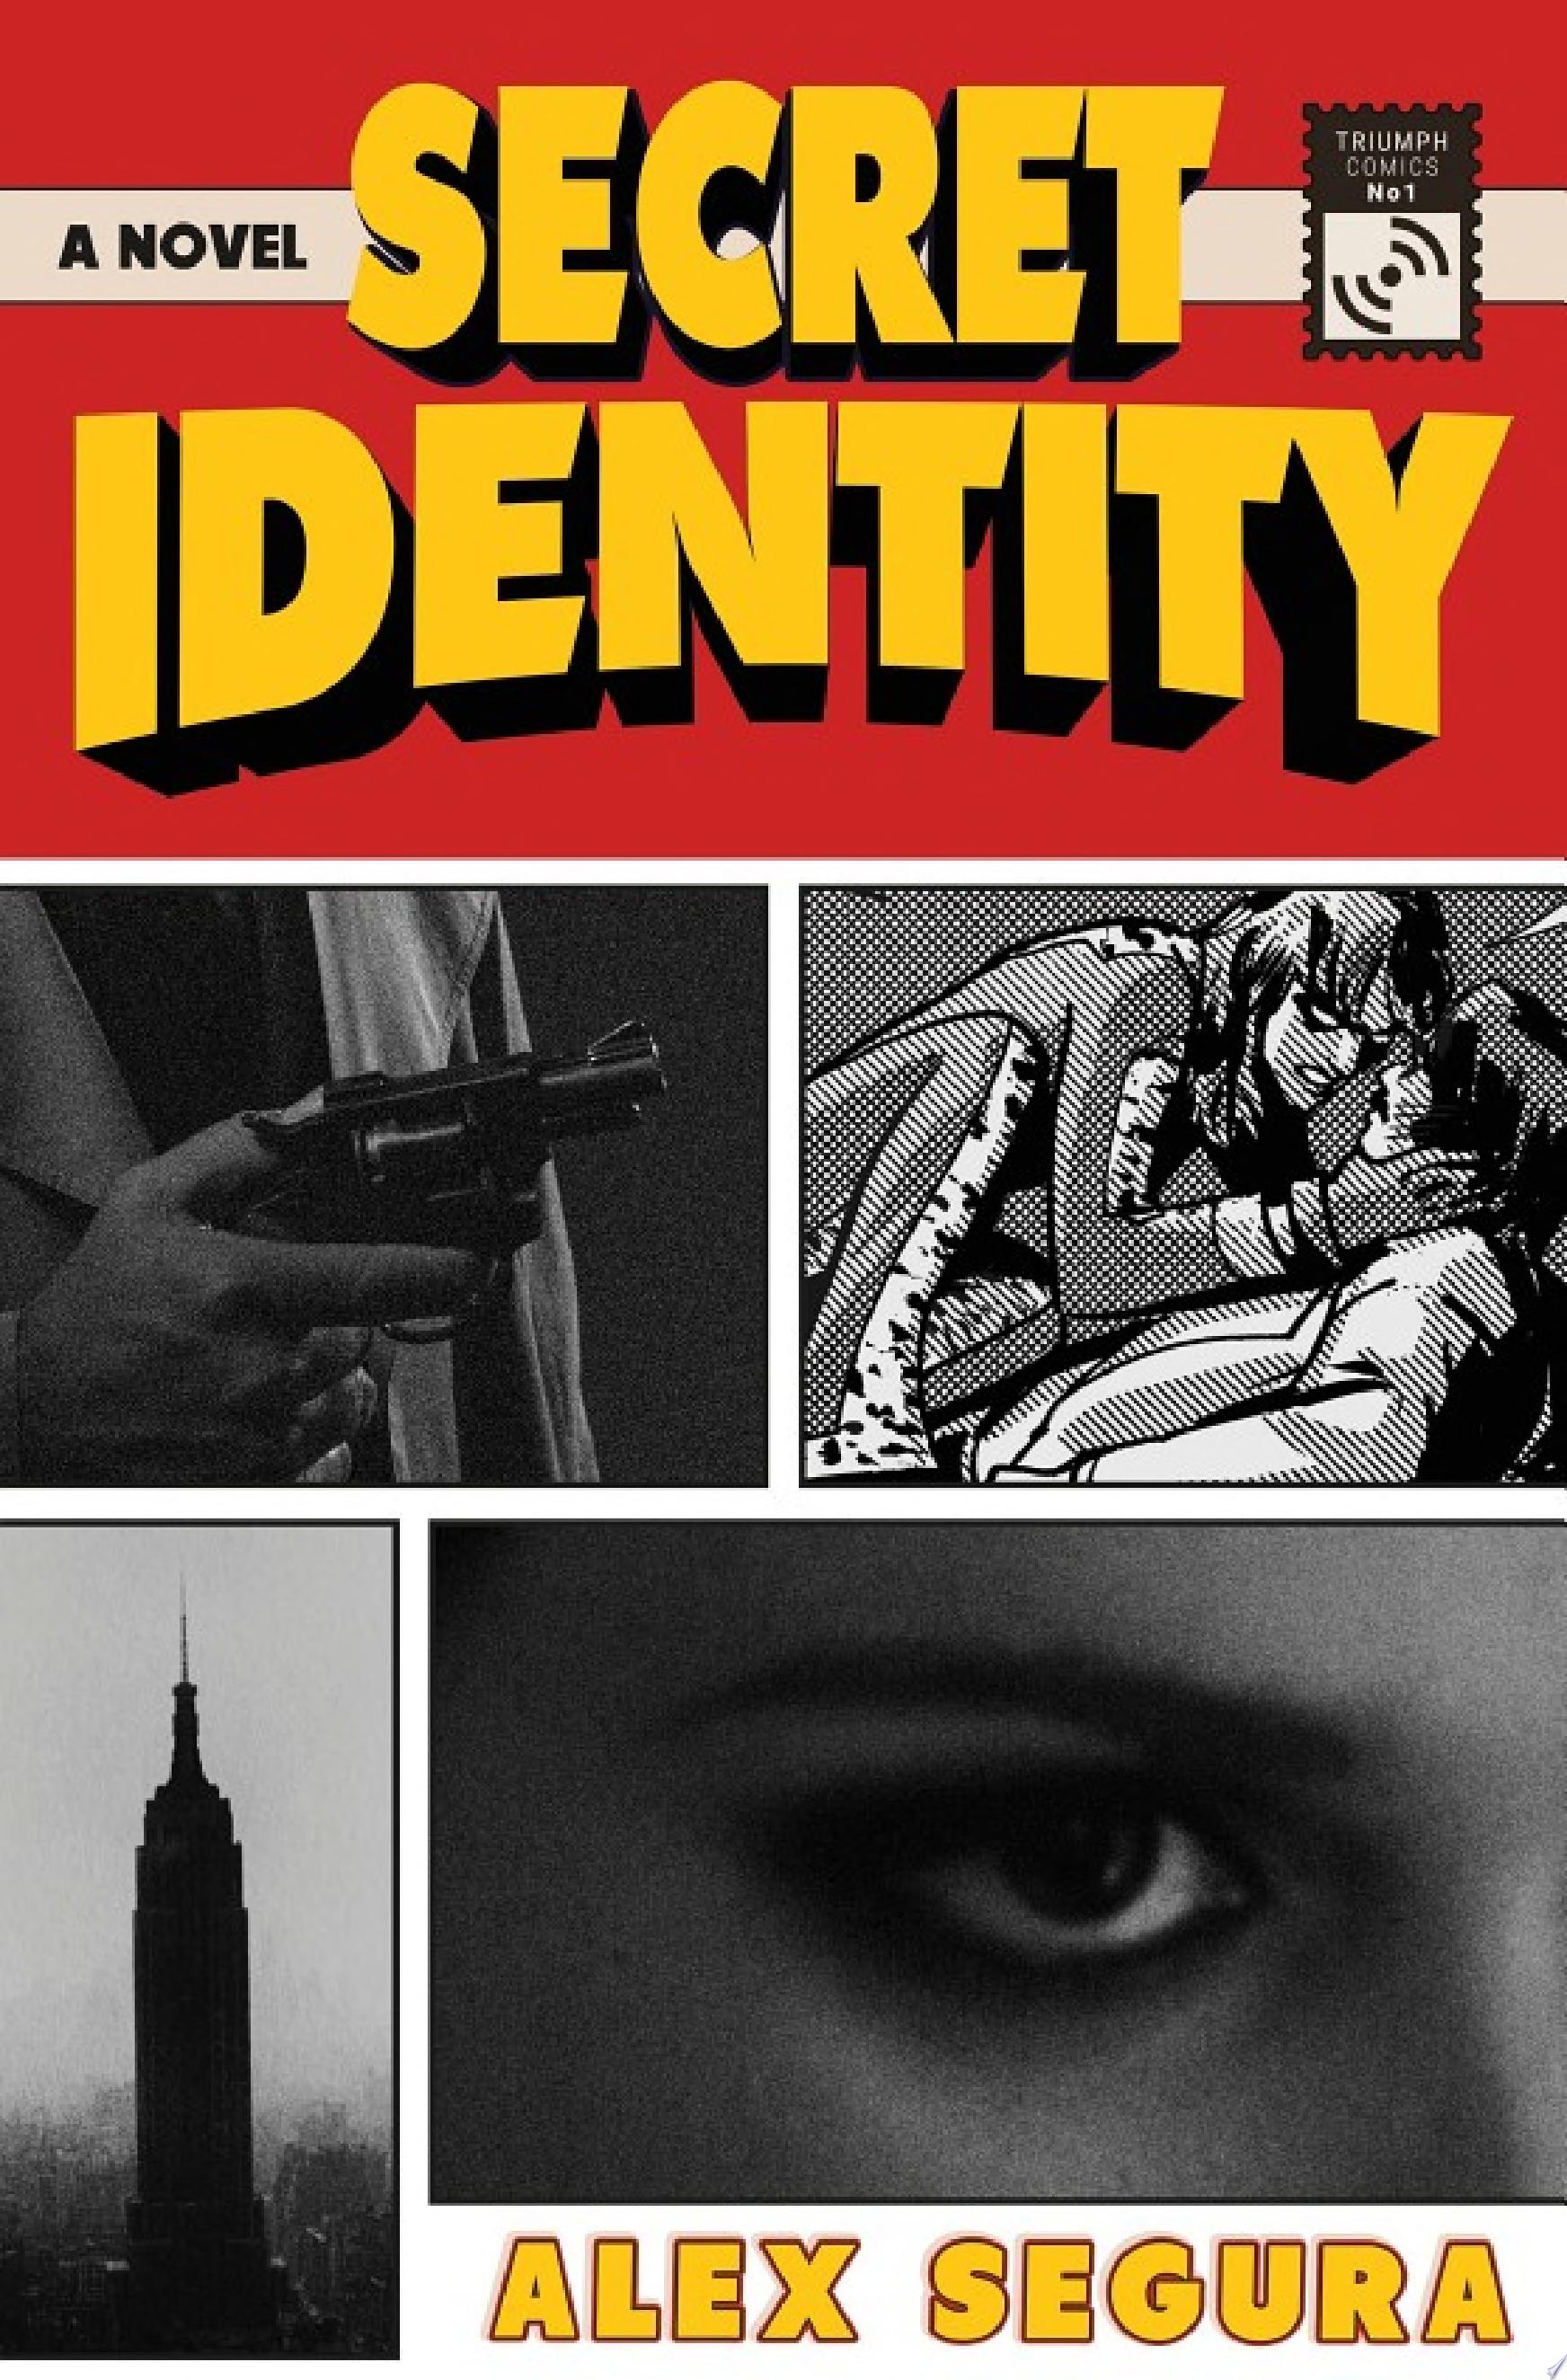 Image for "Secret Identity"